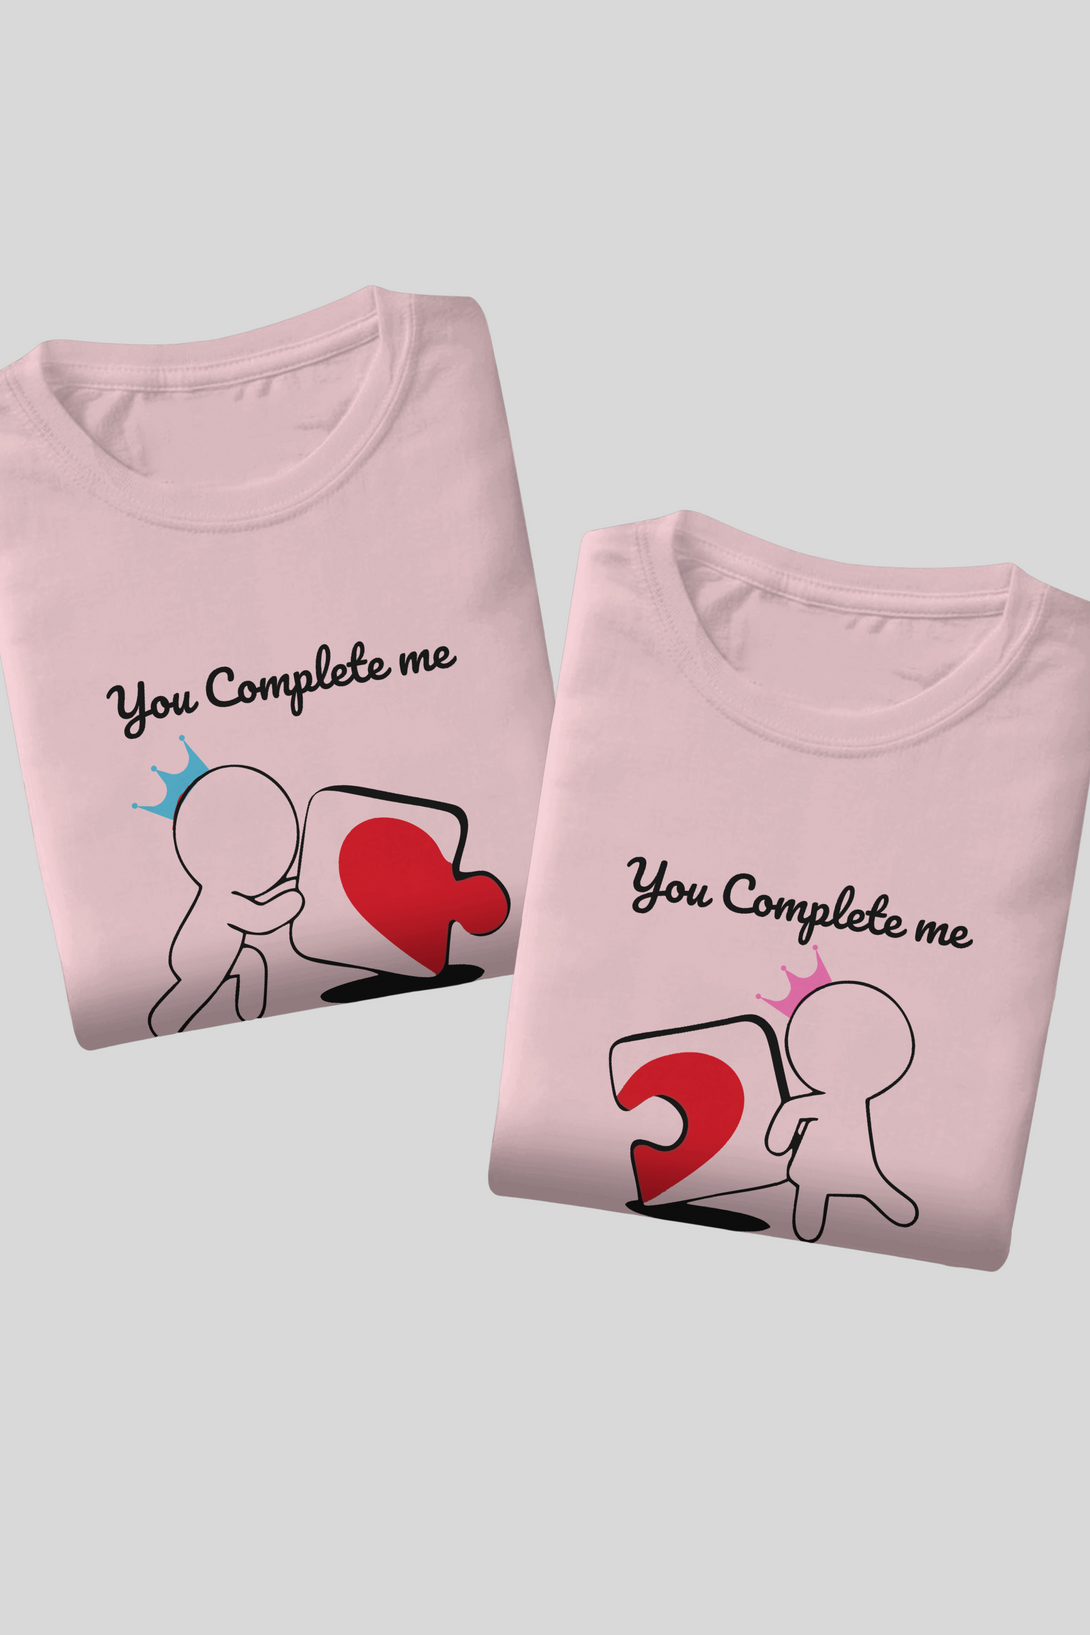 You Complete Me Couple T Shirt - WowWaves - 1